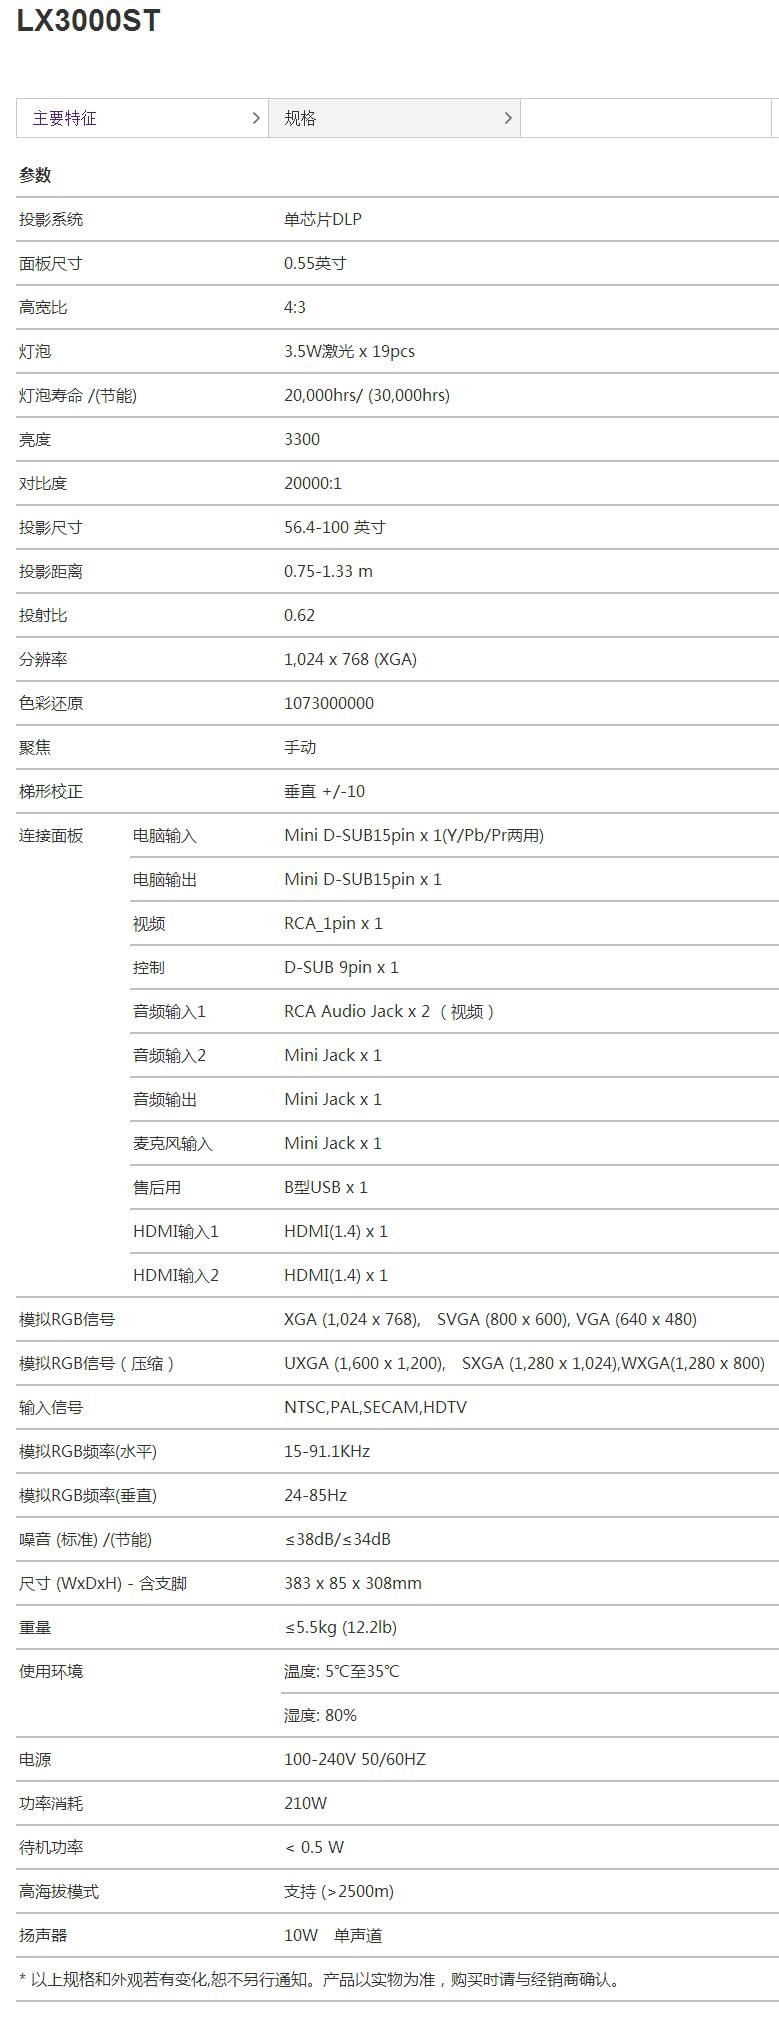 LX3000ST 规格 _ Ricoh China.jpg